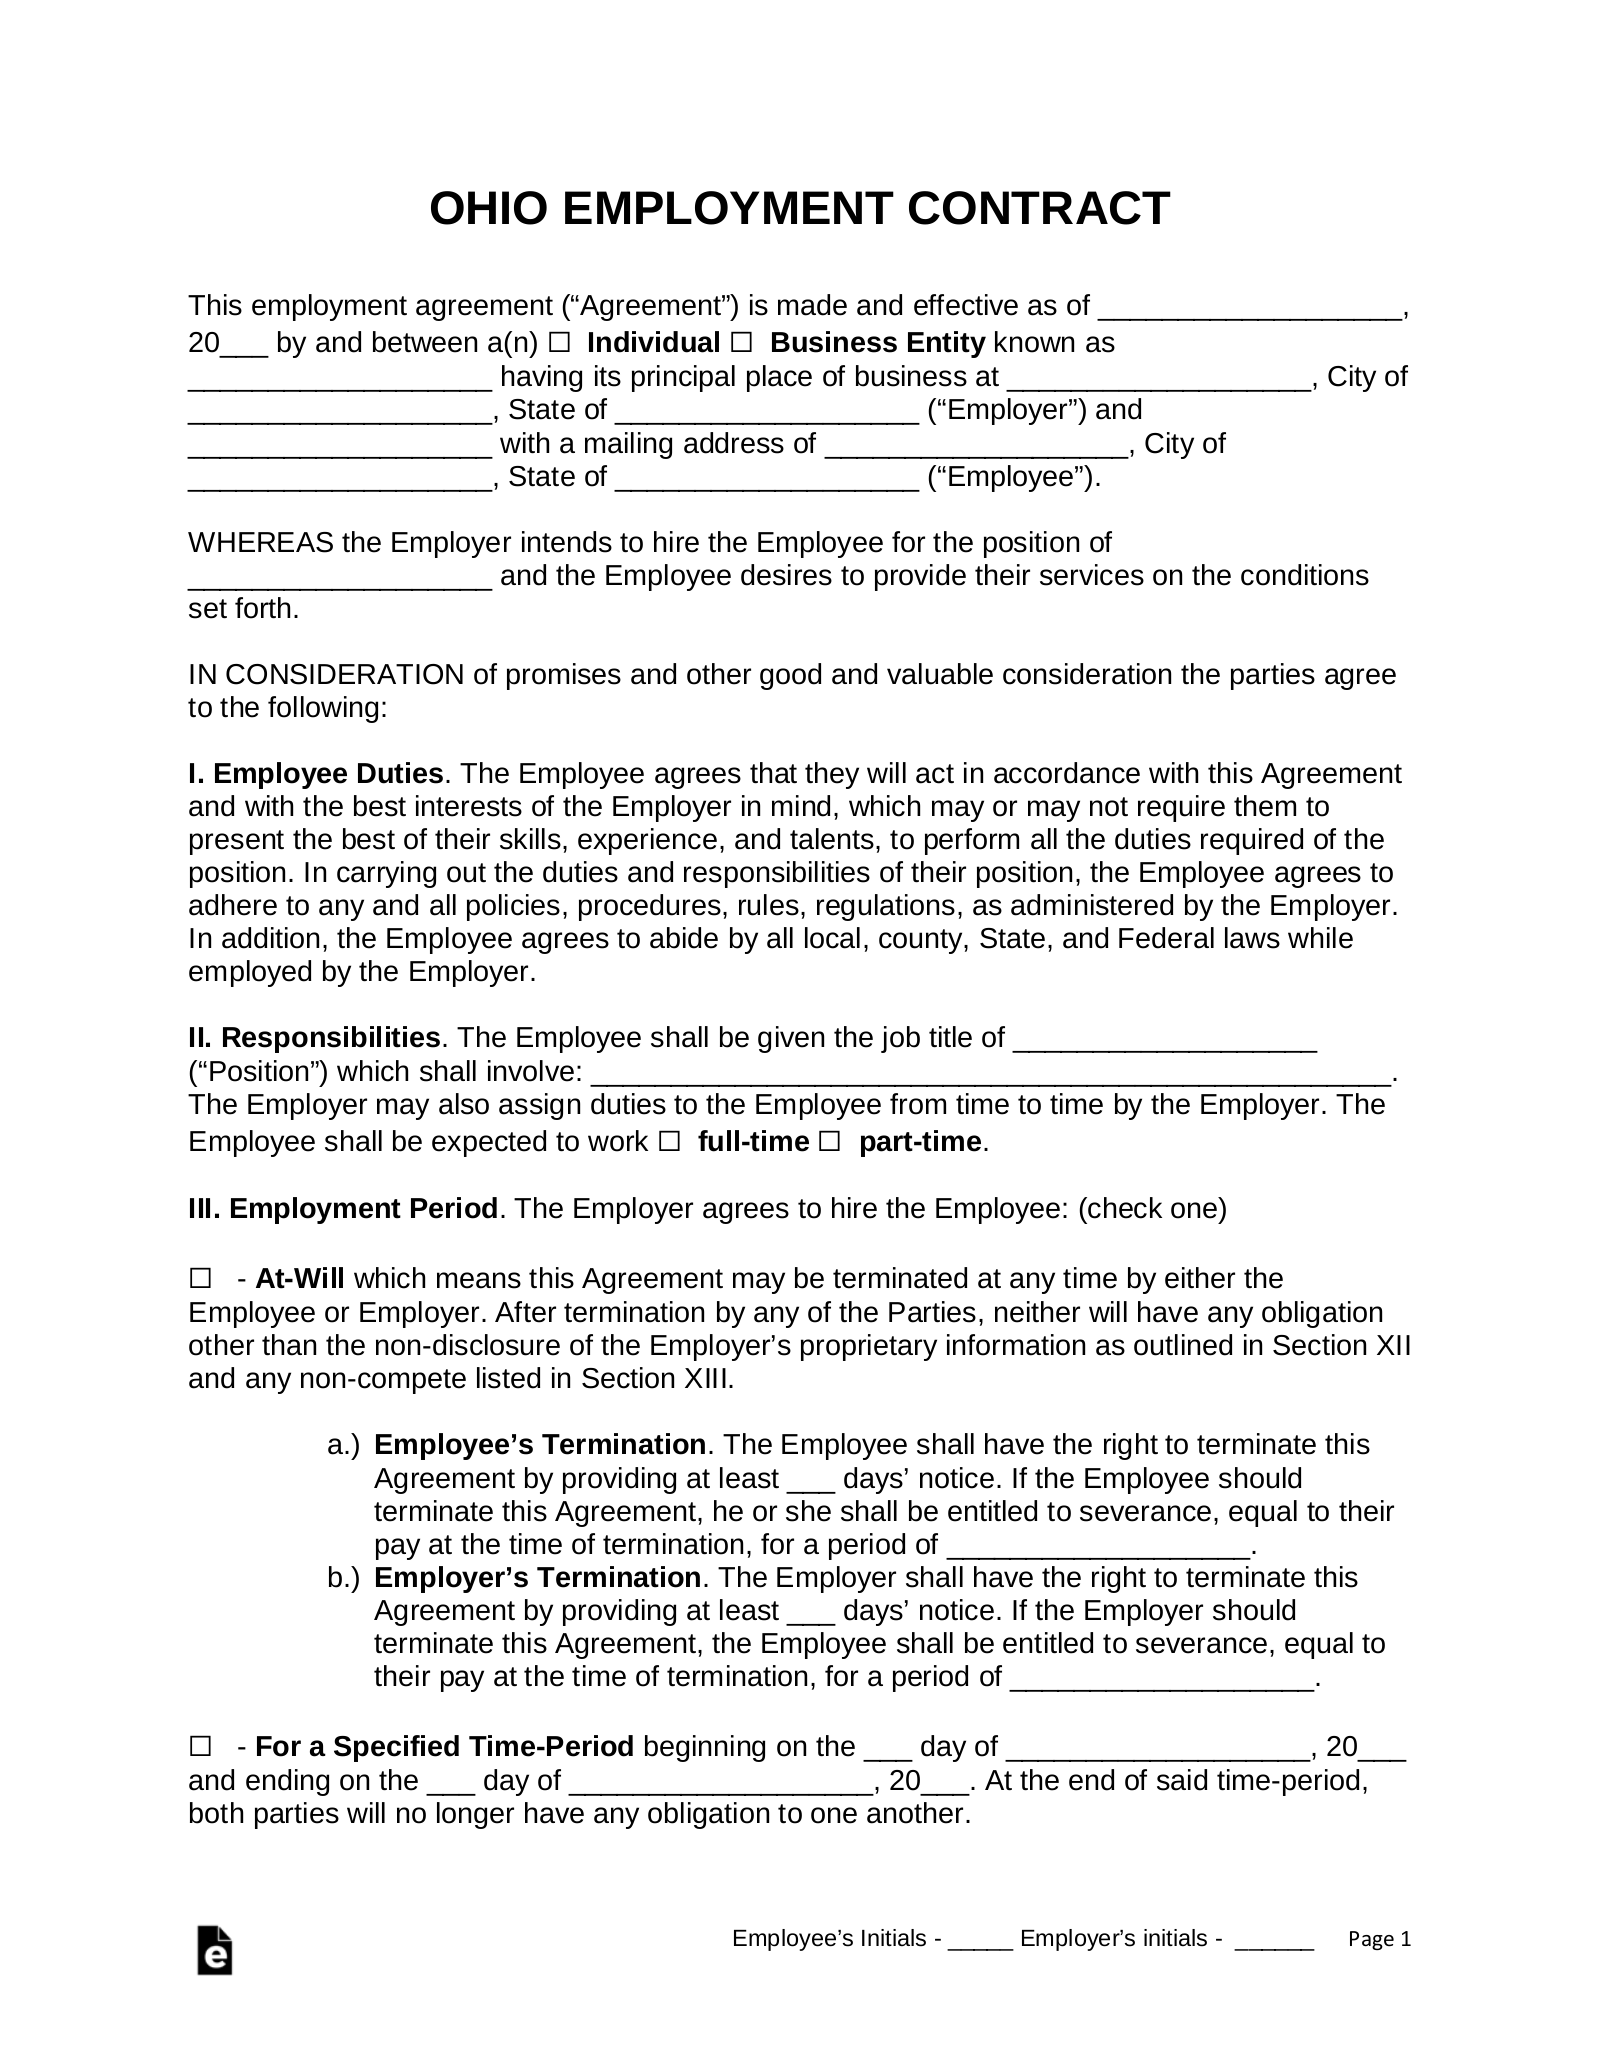 Ohio Employment Contract Templates (4)